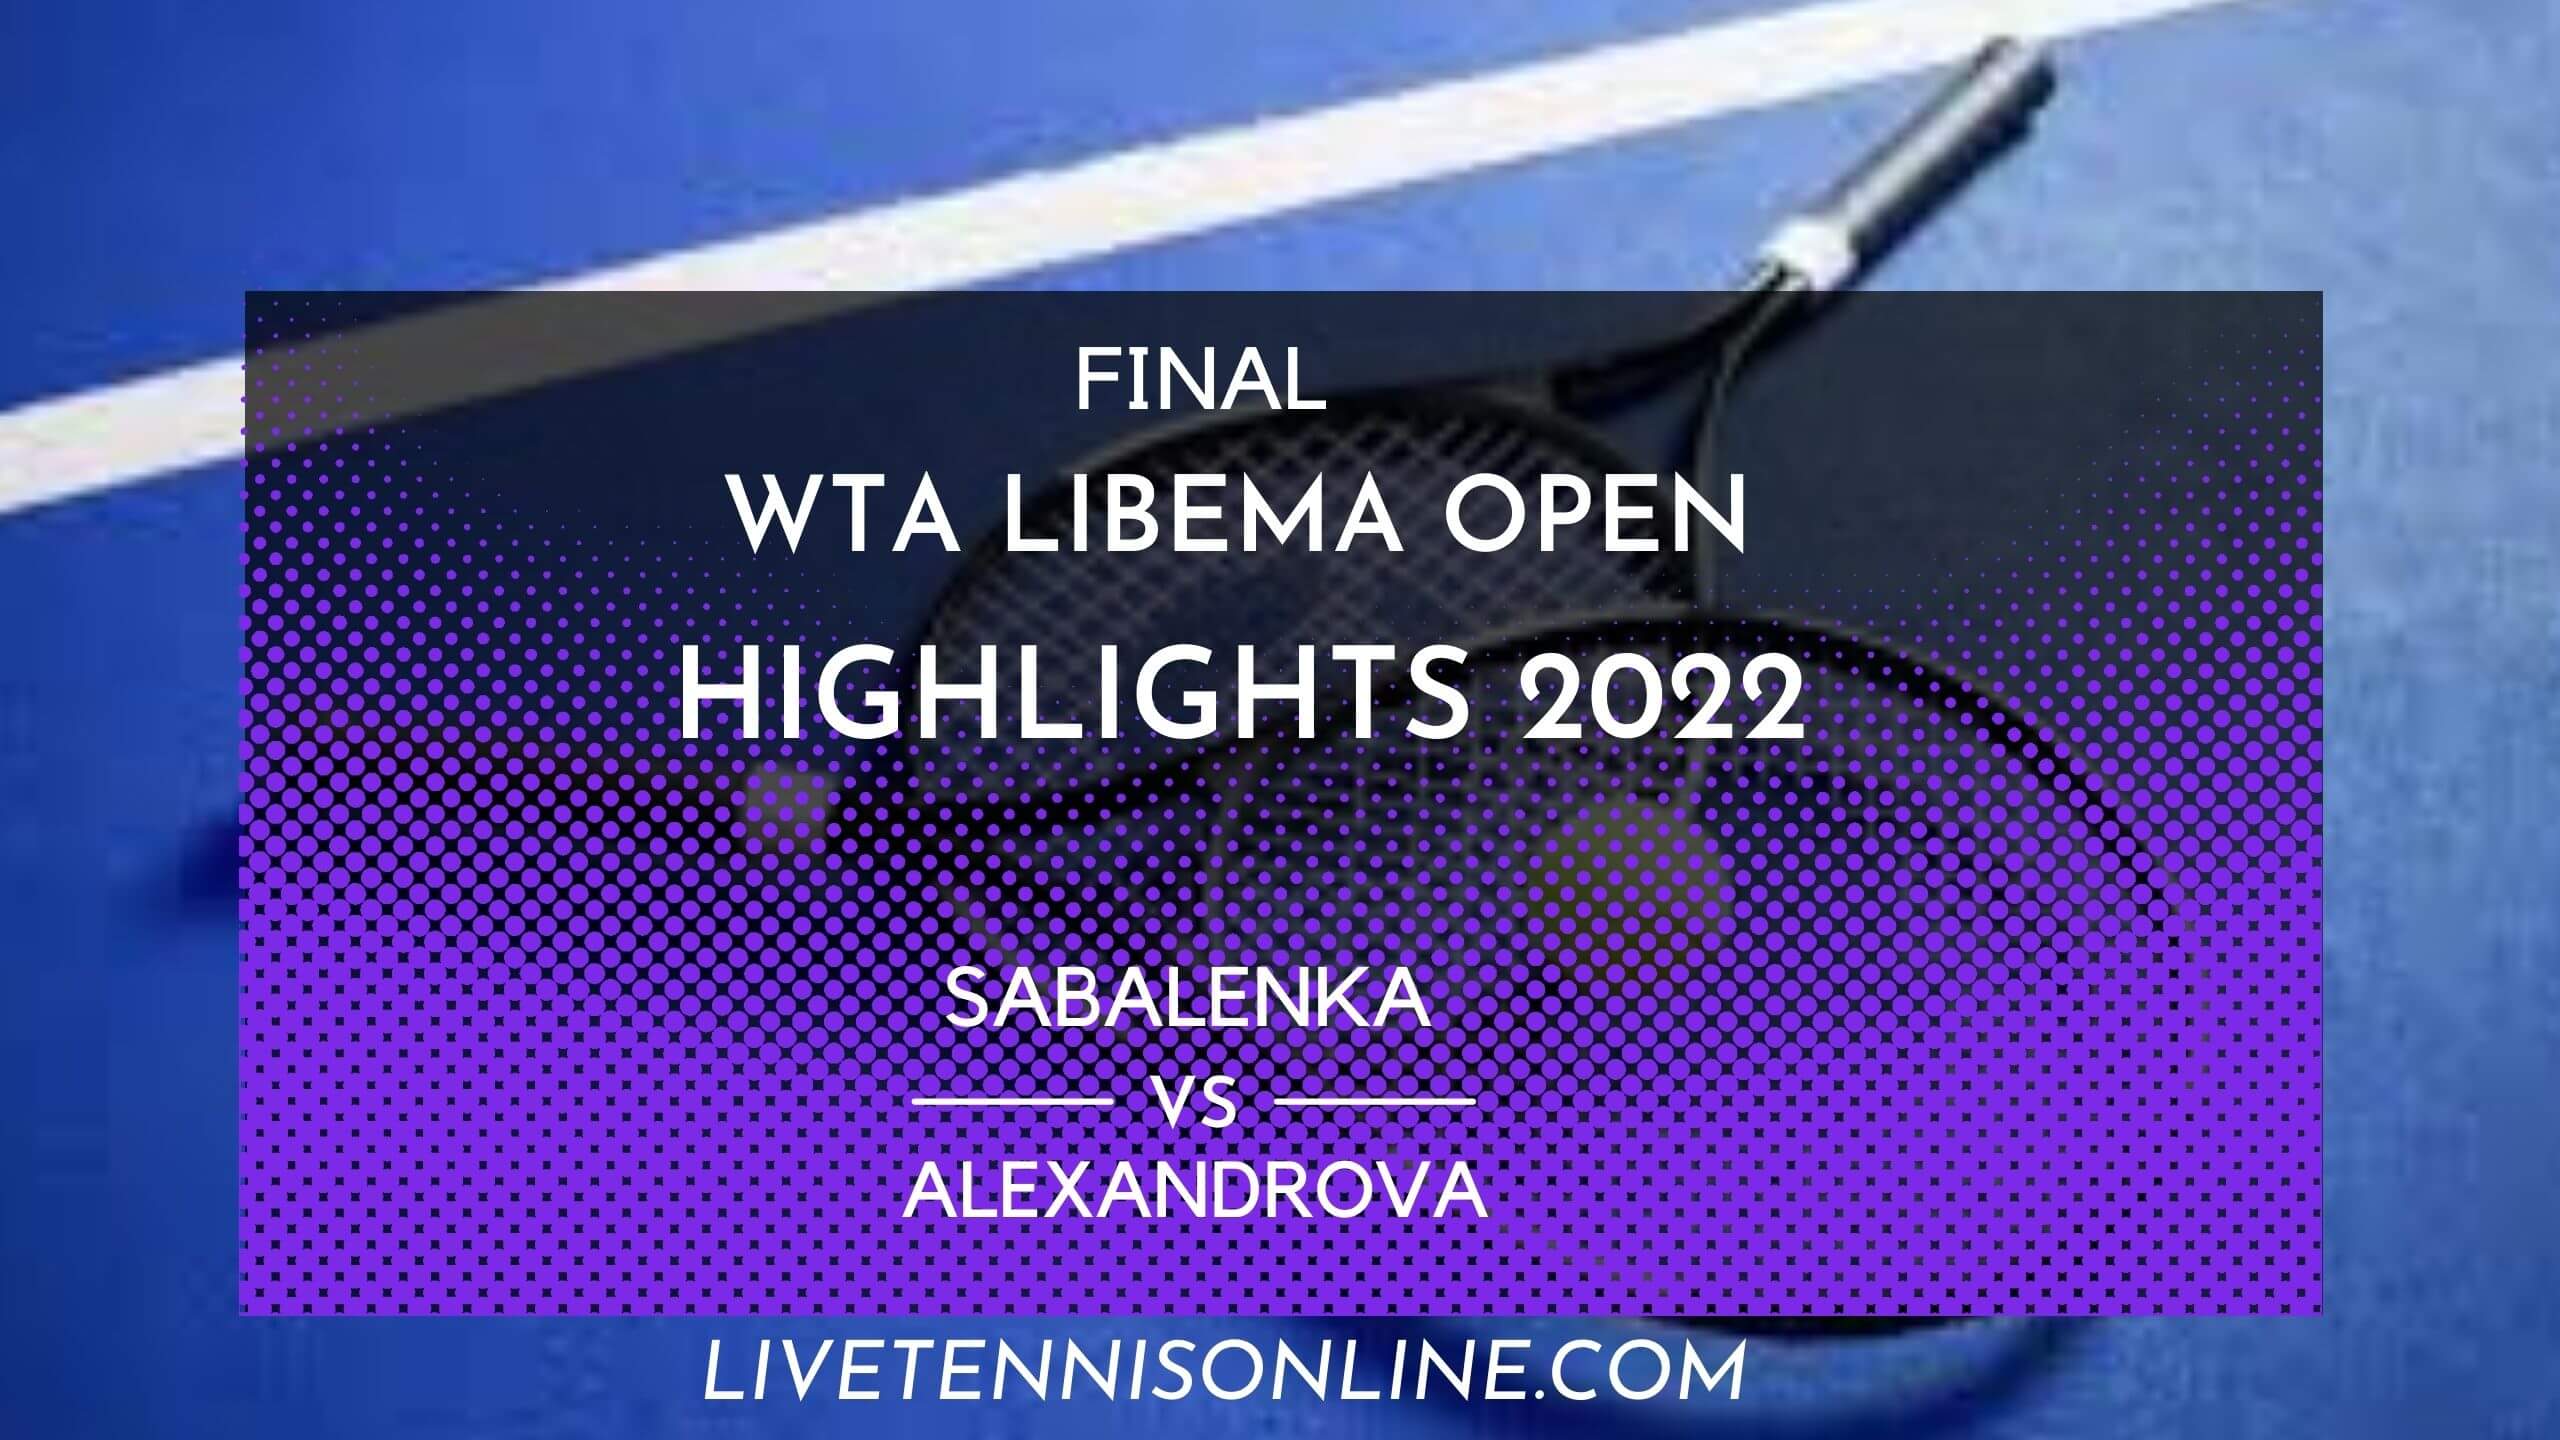 Sabalenka Vs Alexandrova Final Highlights 2022 Libema Open